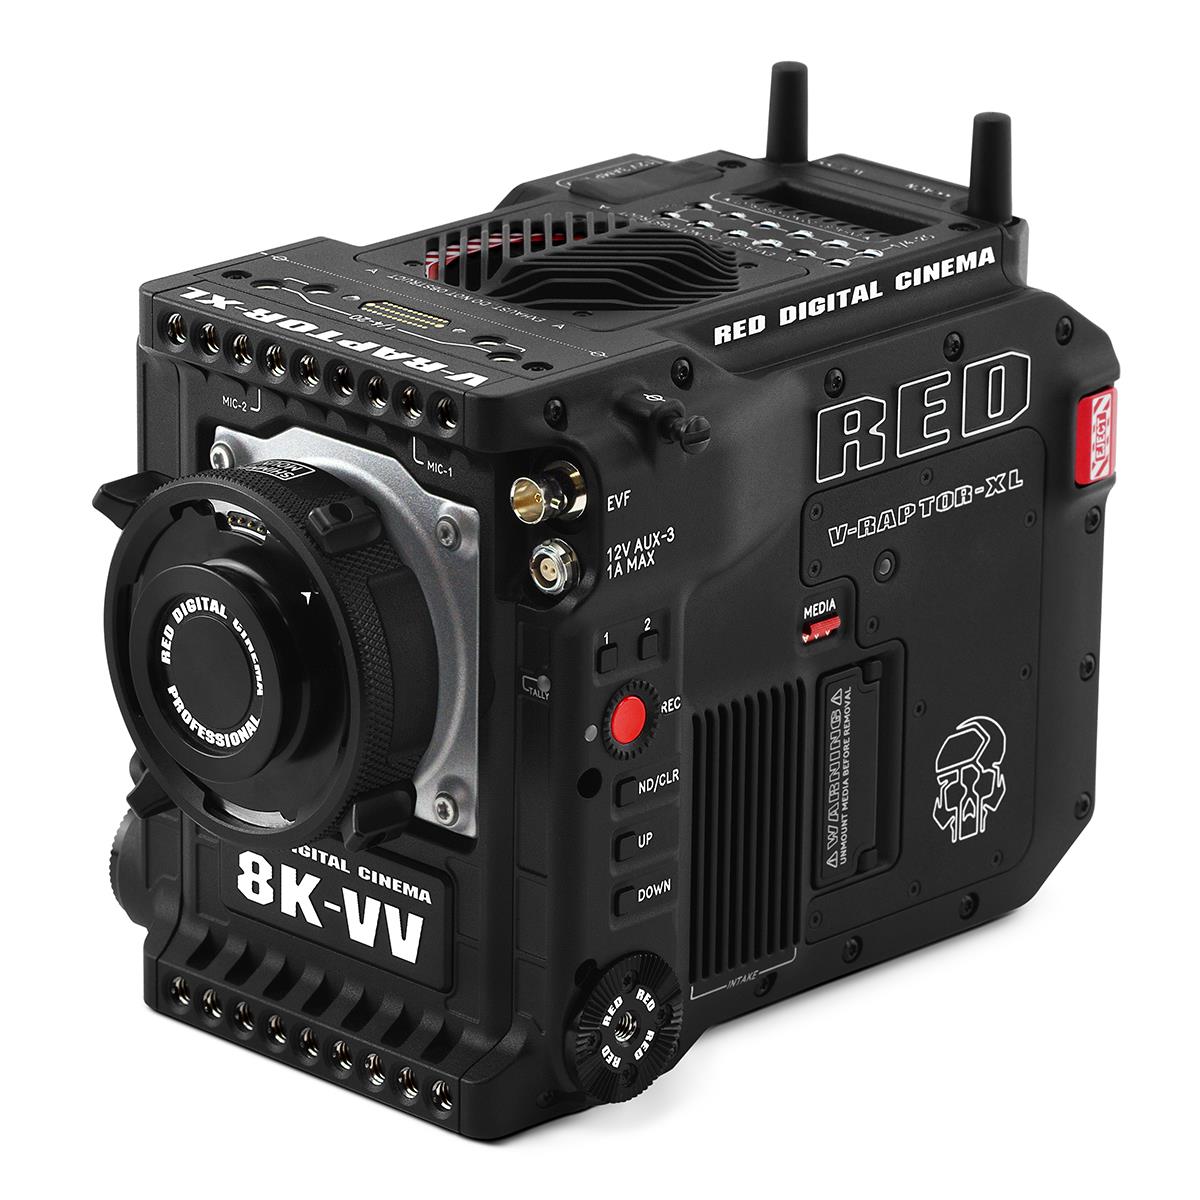 Image of RED Digital Cinema V-RAPTOR XL 8K VV Cinema Camera